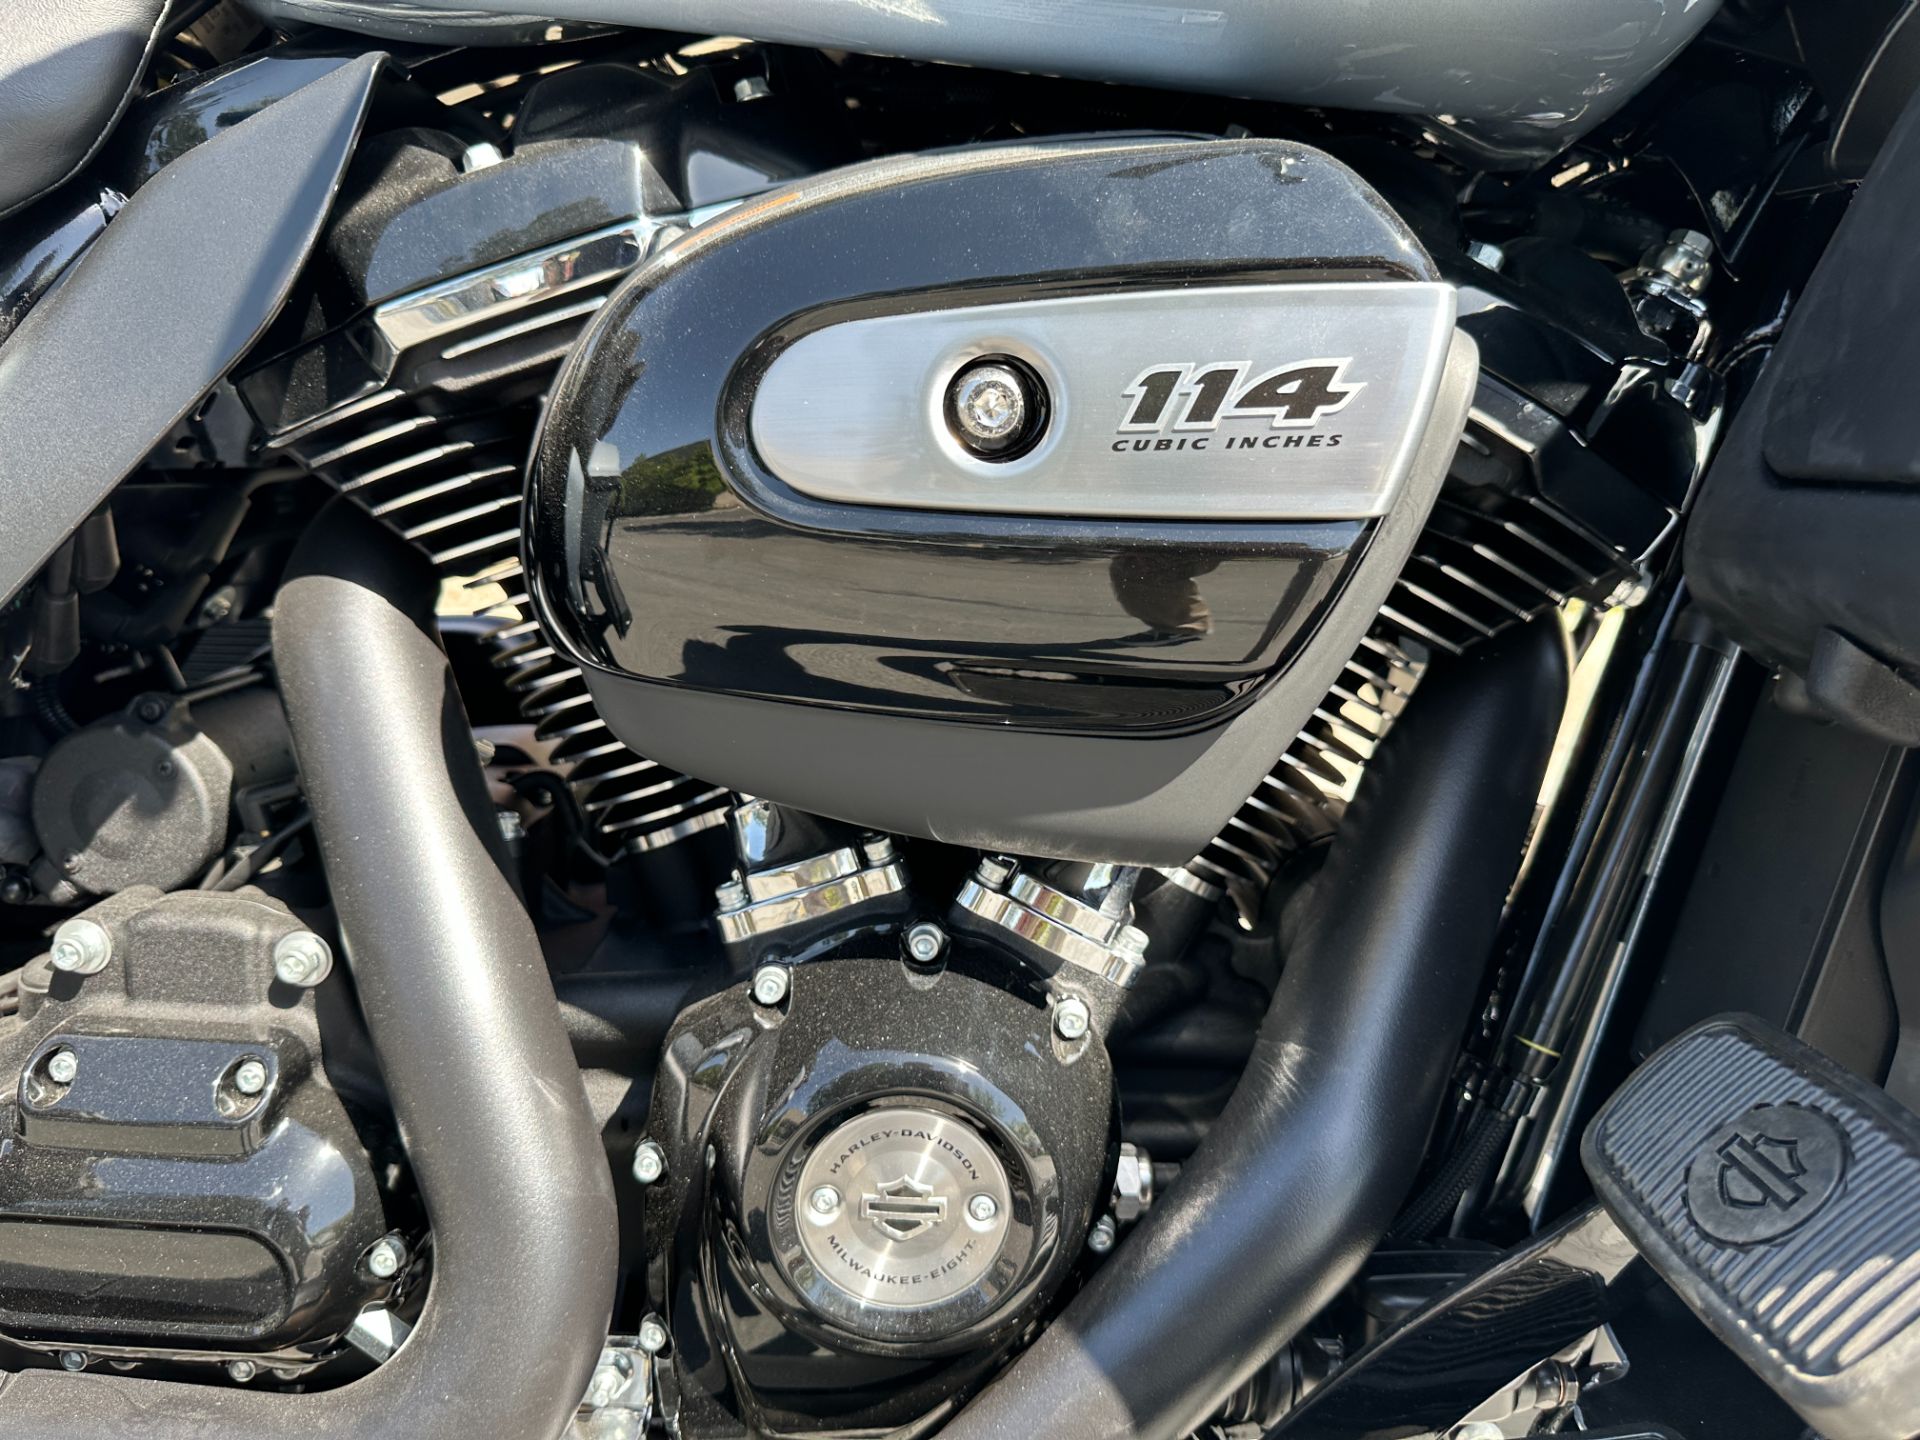 2023 Harley-Davidson Road Glide® Limited in Sandy, Utah - Photo 3